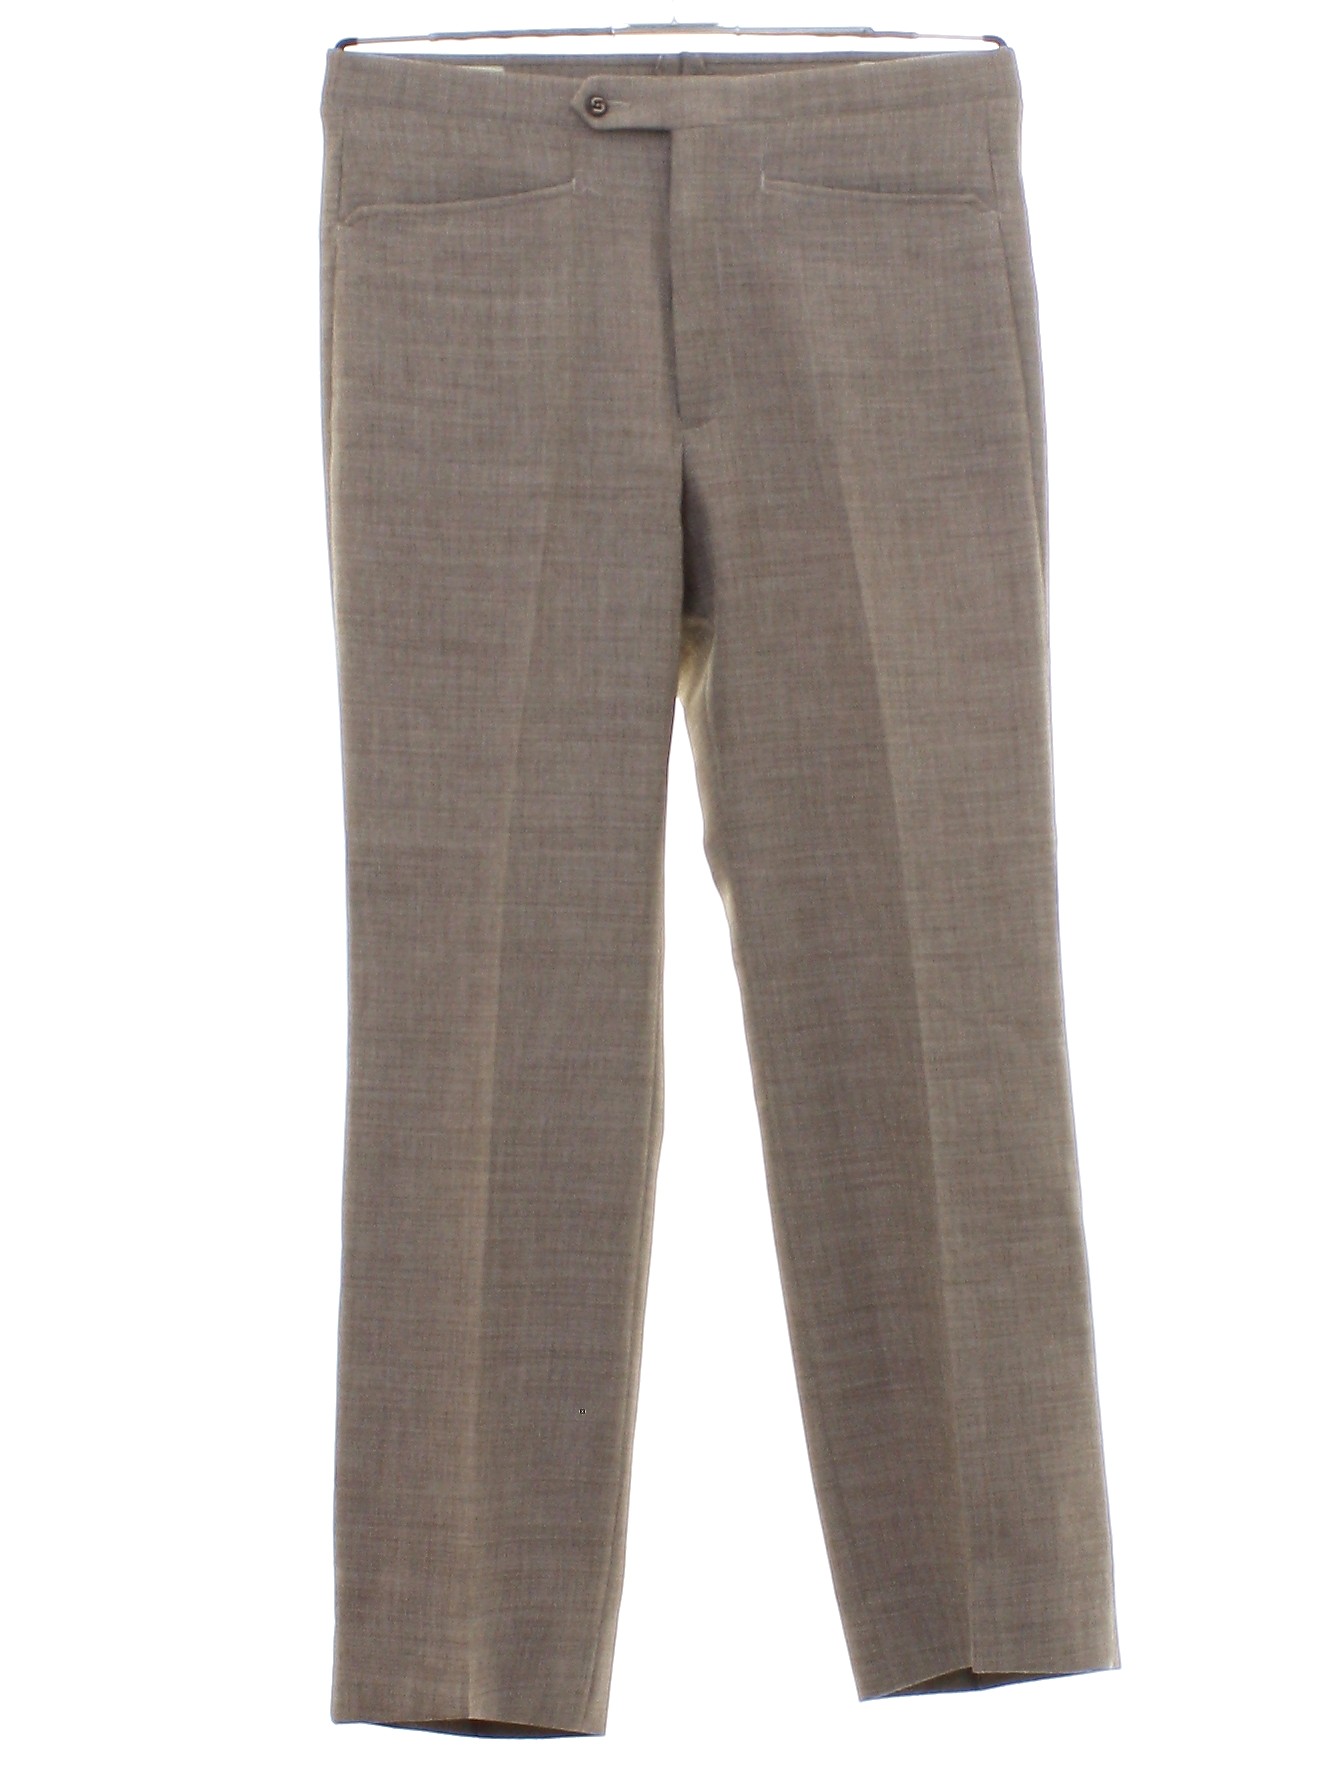 1970s Vintage Pants: 70s -Sansabelt- Mens heathered tan brown solid ...